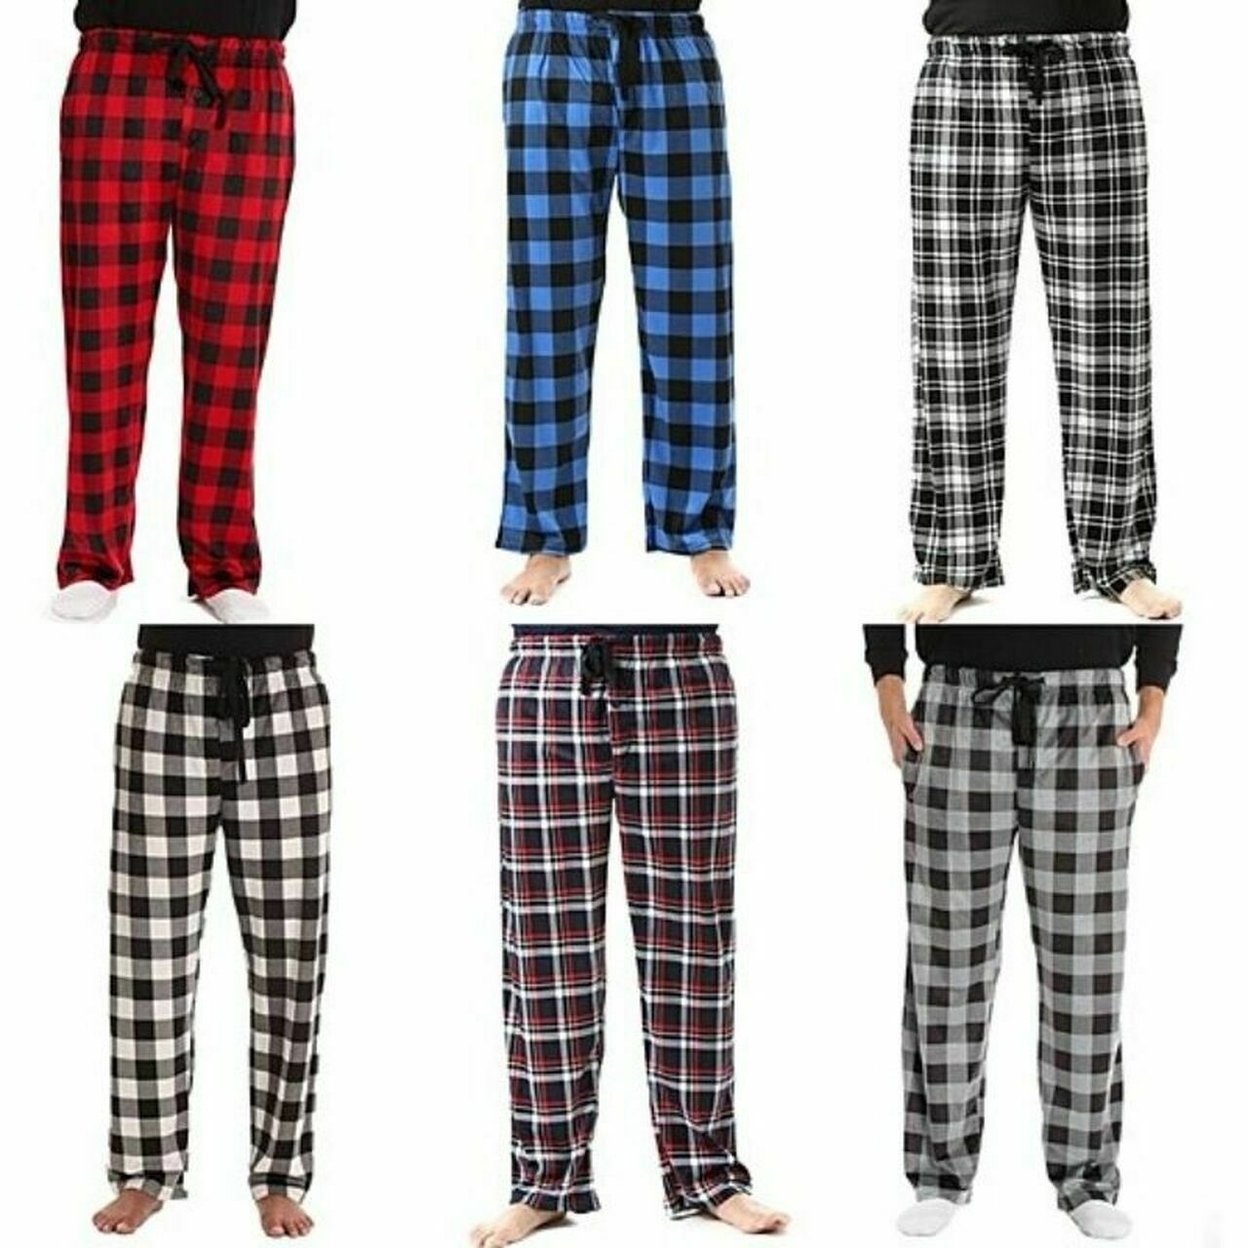 2-Pack: Men's Ultra Soft Cozy Flannel Fleece Plaid Pajama Sleep Bottom Lounge Pants - Black & Blue, Large